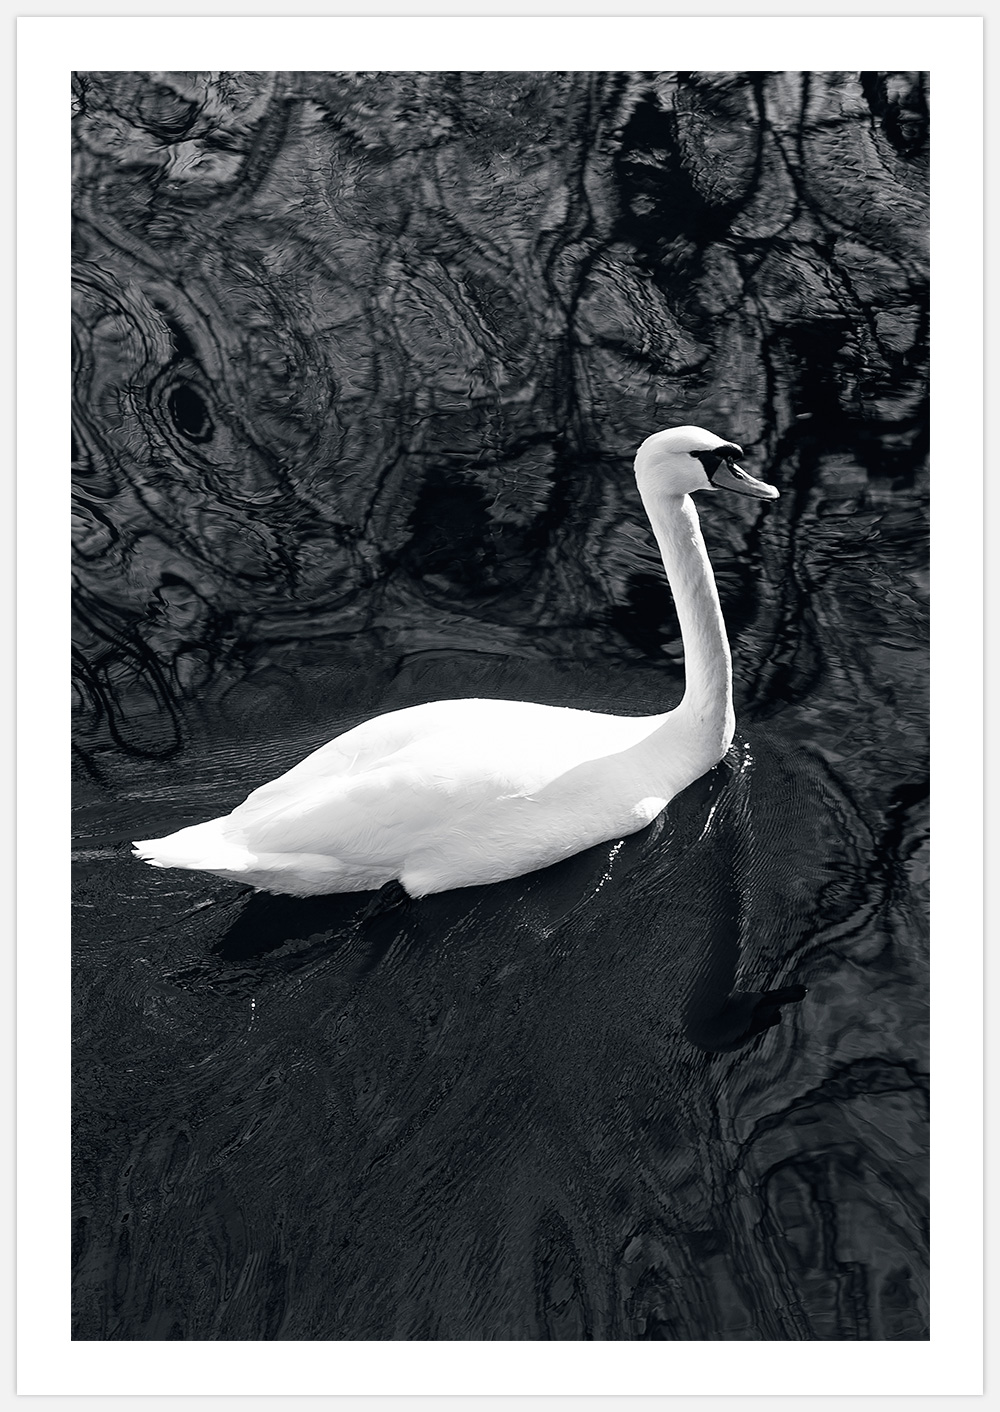 Tavla med svan, At Print Swan in Black Water. Foto Insplendor Art Studior i Sverige.